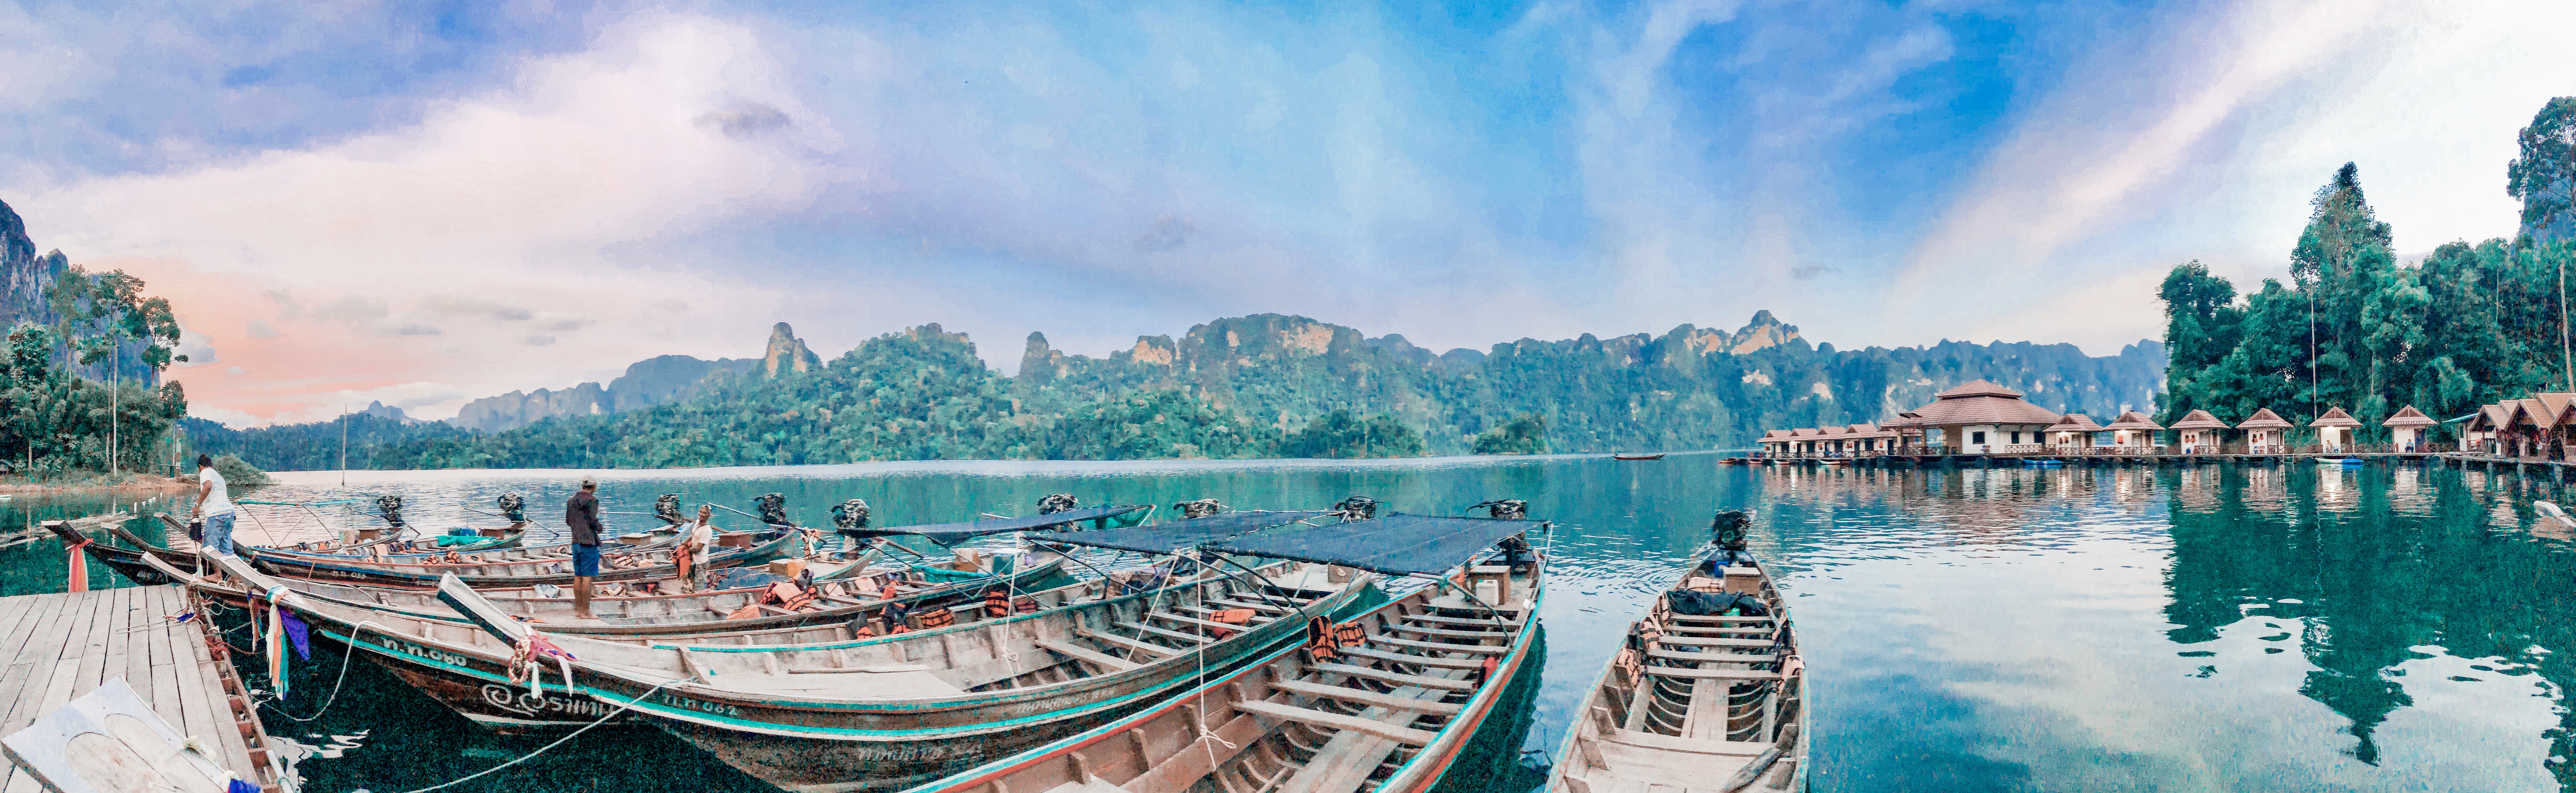 Ultimate Guide to Cheow Lan Lake, Khao Sok | Thailand’s Hidden Gem